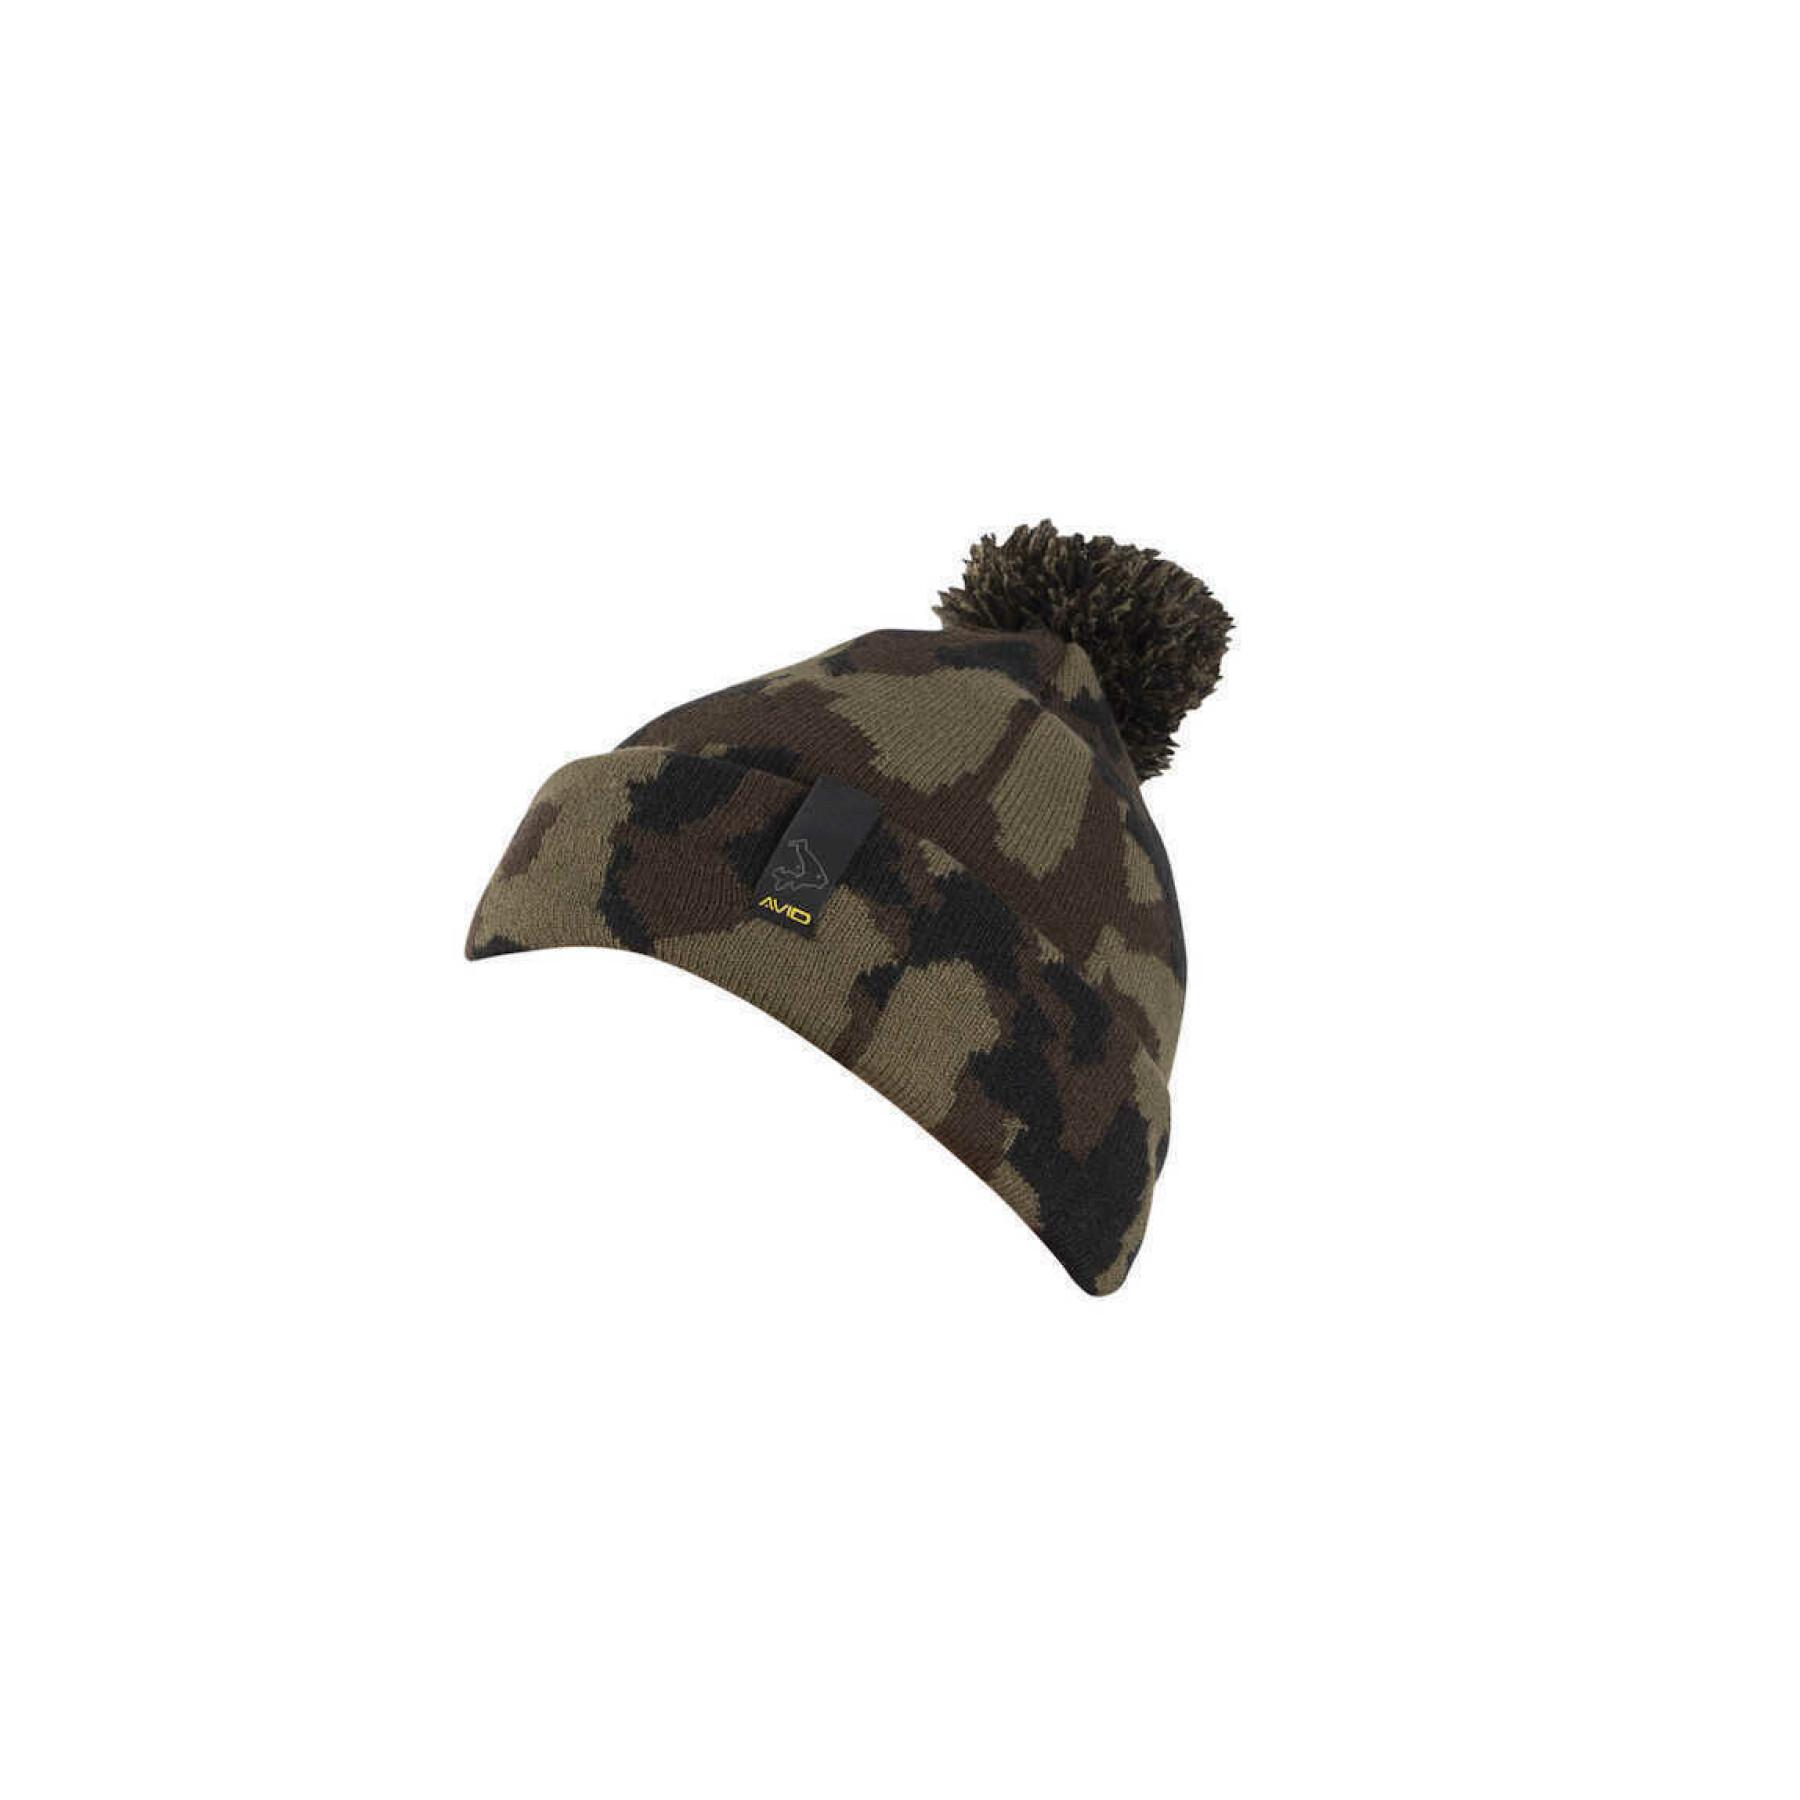 Camouflage pom-pom hat Avid